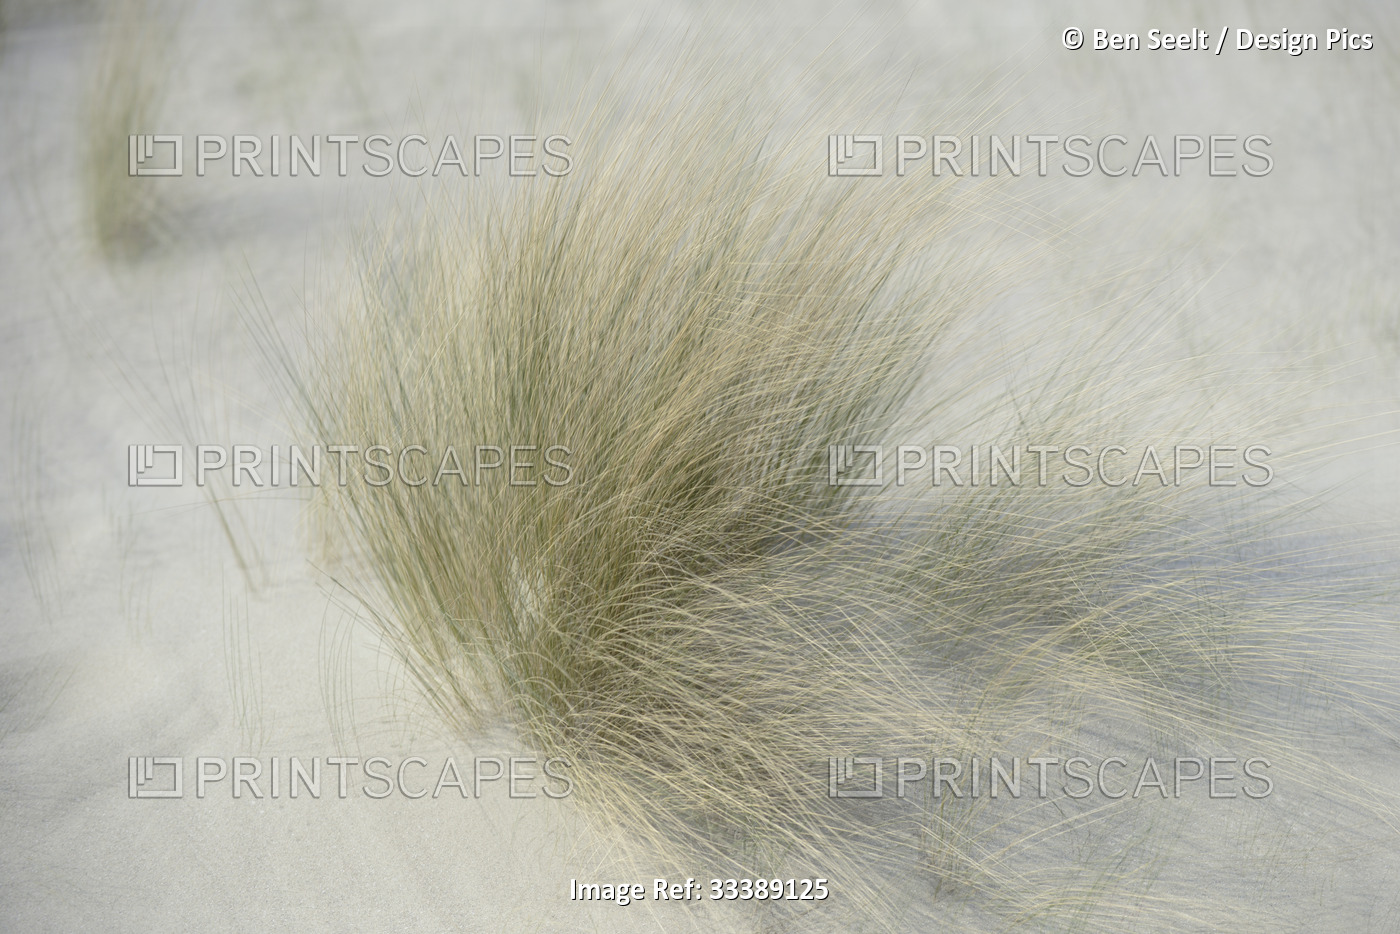 Windblown dune grass; Vrouwenpolder, Zeeland, Netherlands